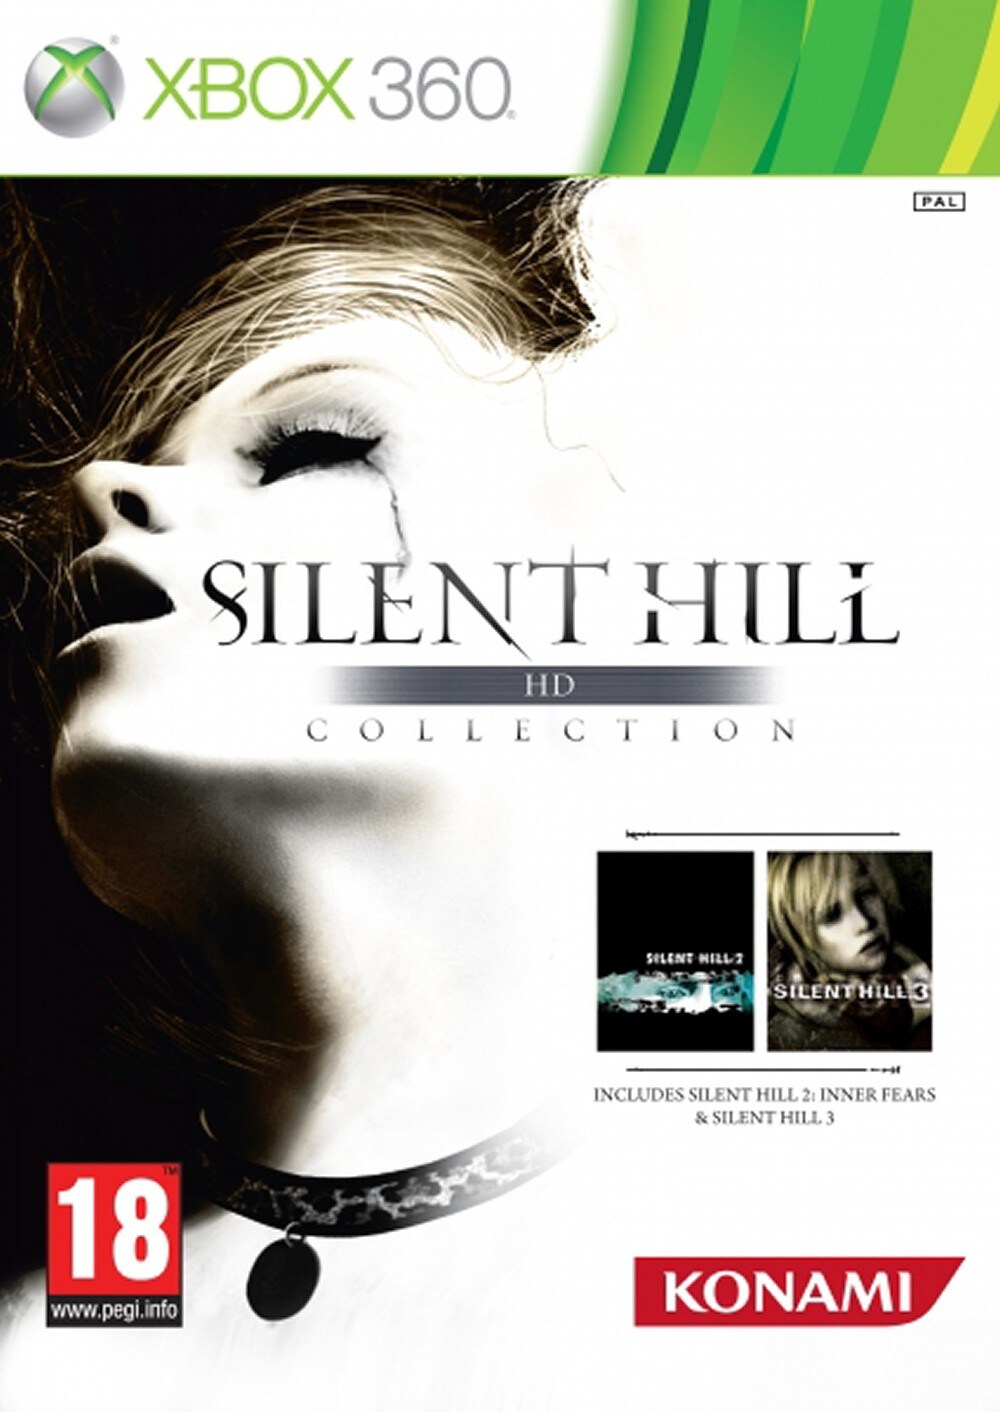 Silent Hill HD Collection (X360) - Xbox 360 Spel - Elgiganten